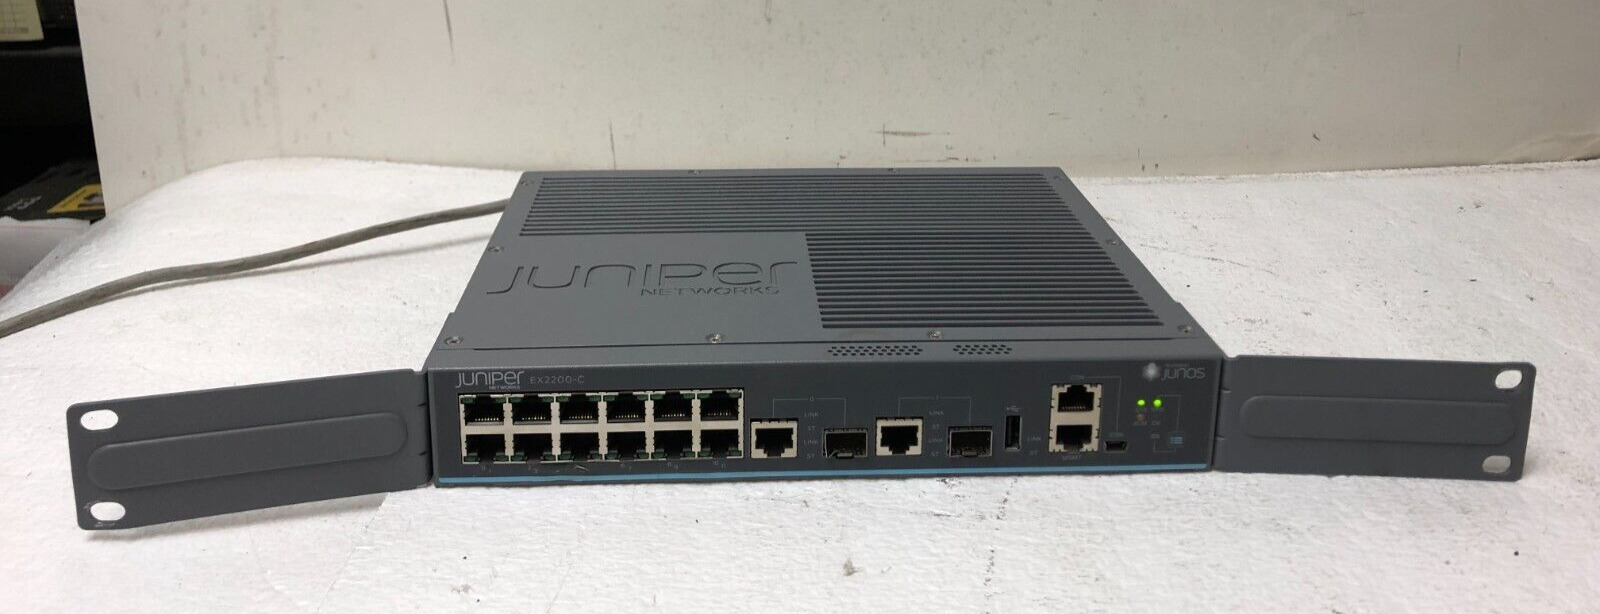 Juniper Networks EX2200-C-12T-2G 12 Port Gigabit Switch